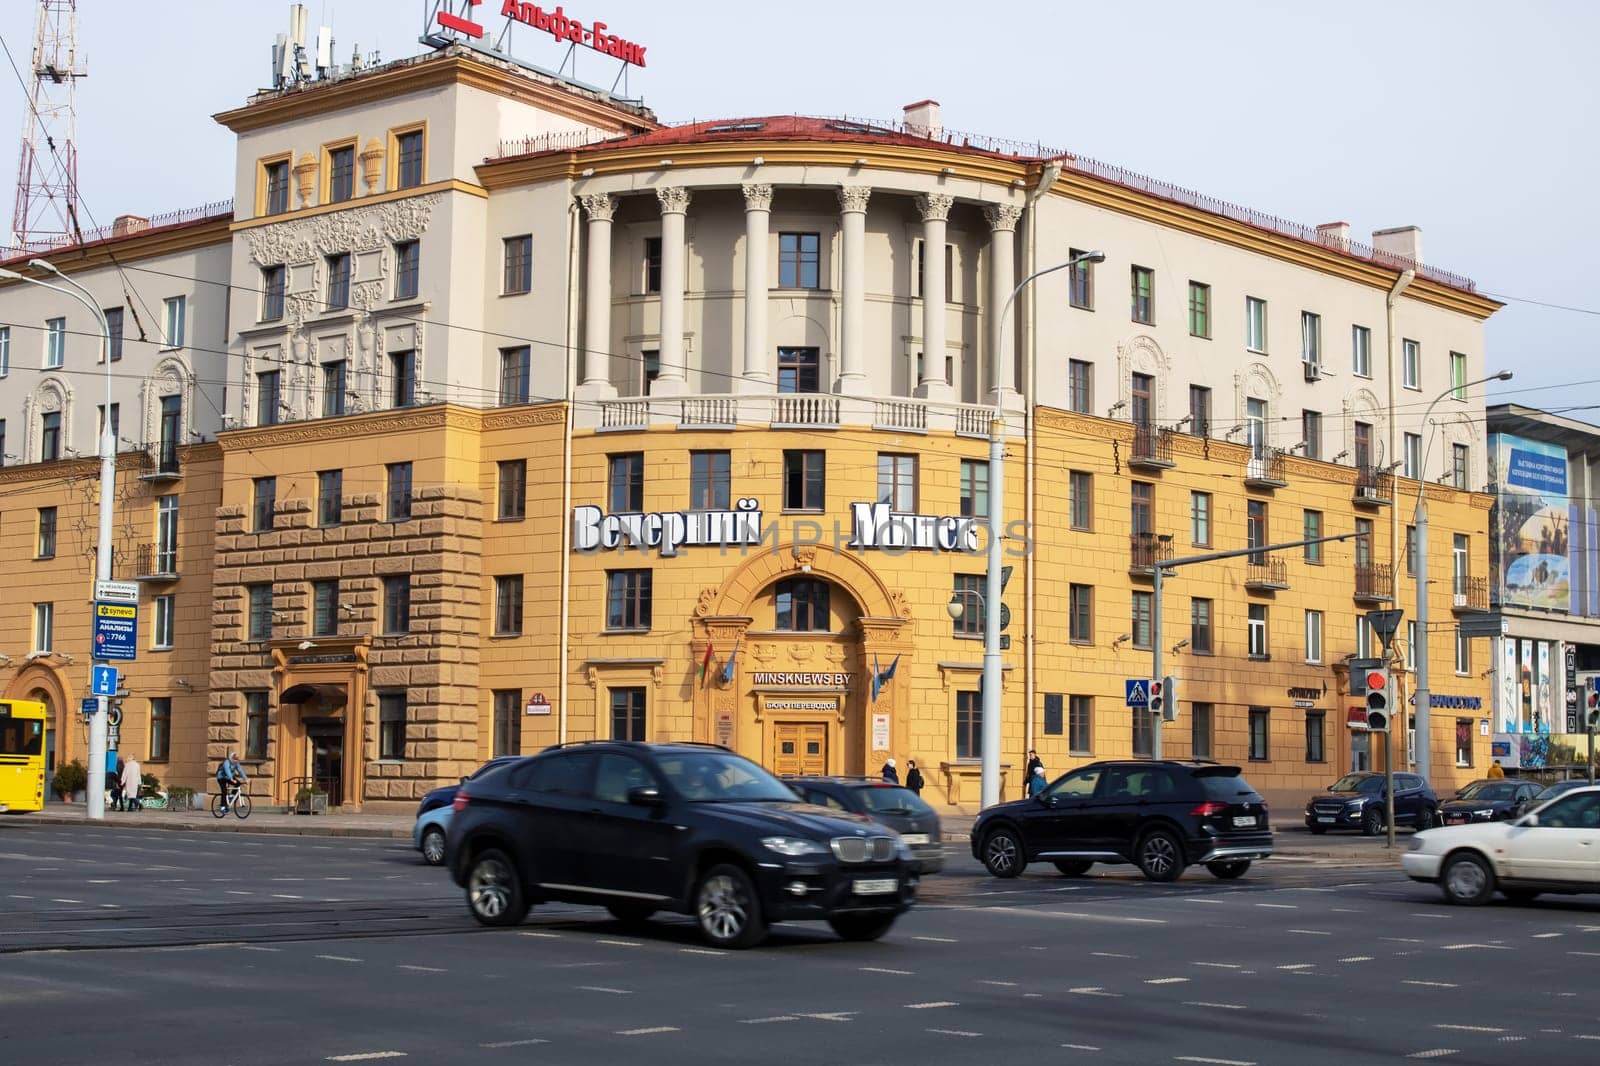 The building of the newspaper Vecherniy Minsk